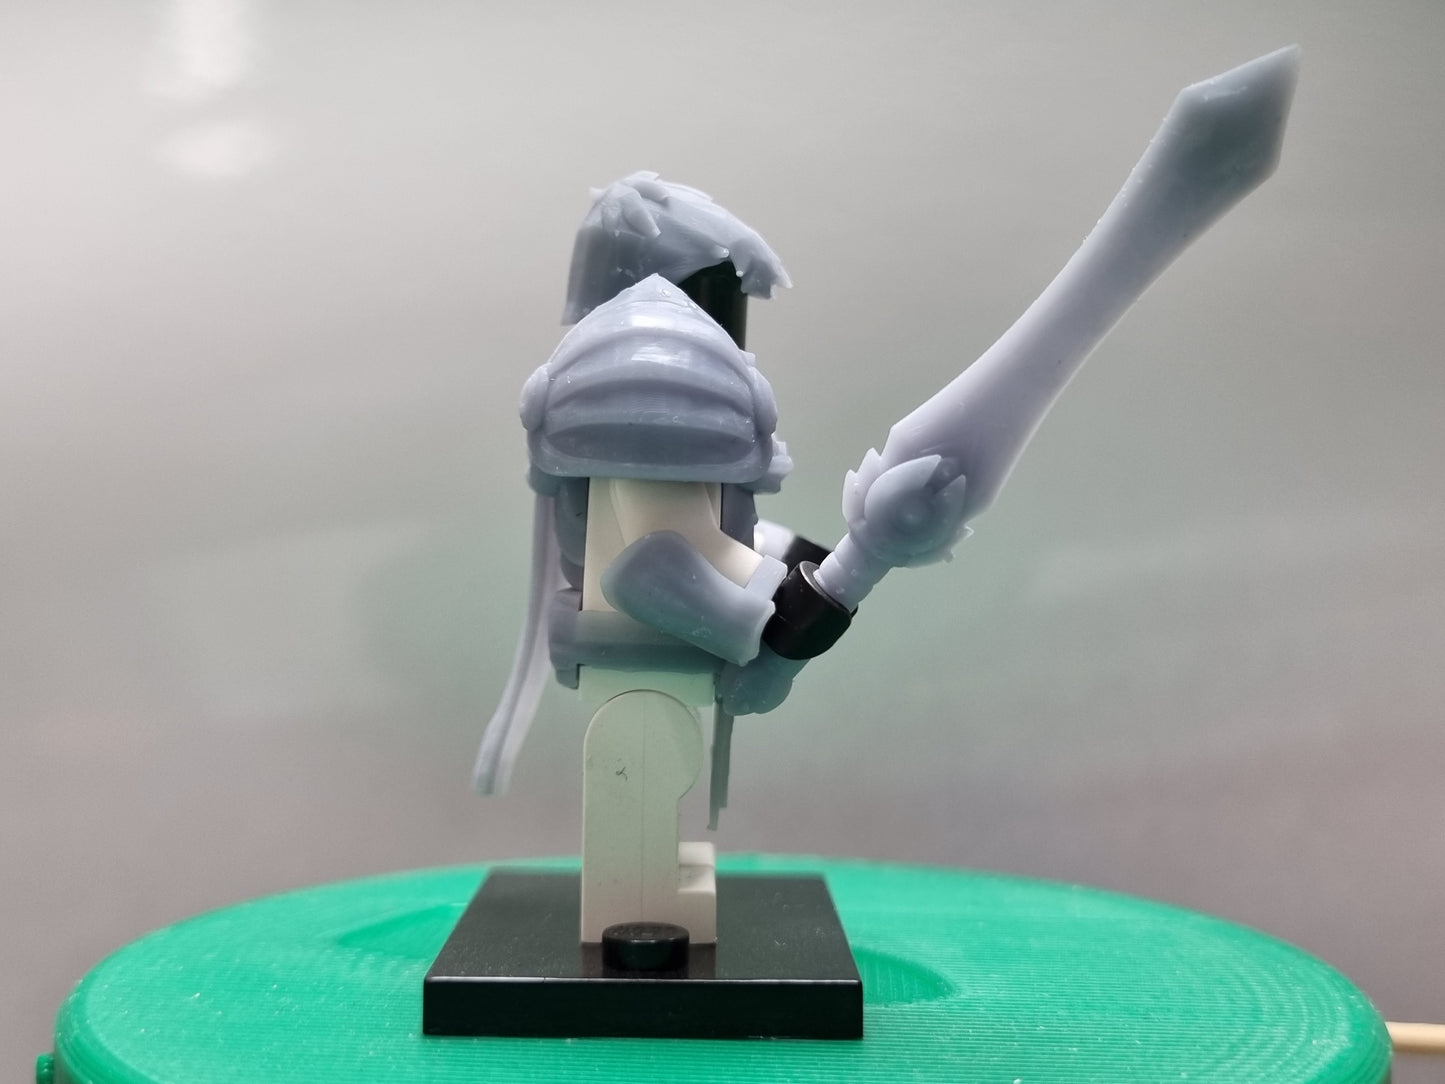 Lego compatible custom 3D printed Garen armor set!